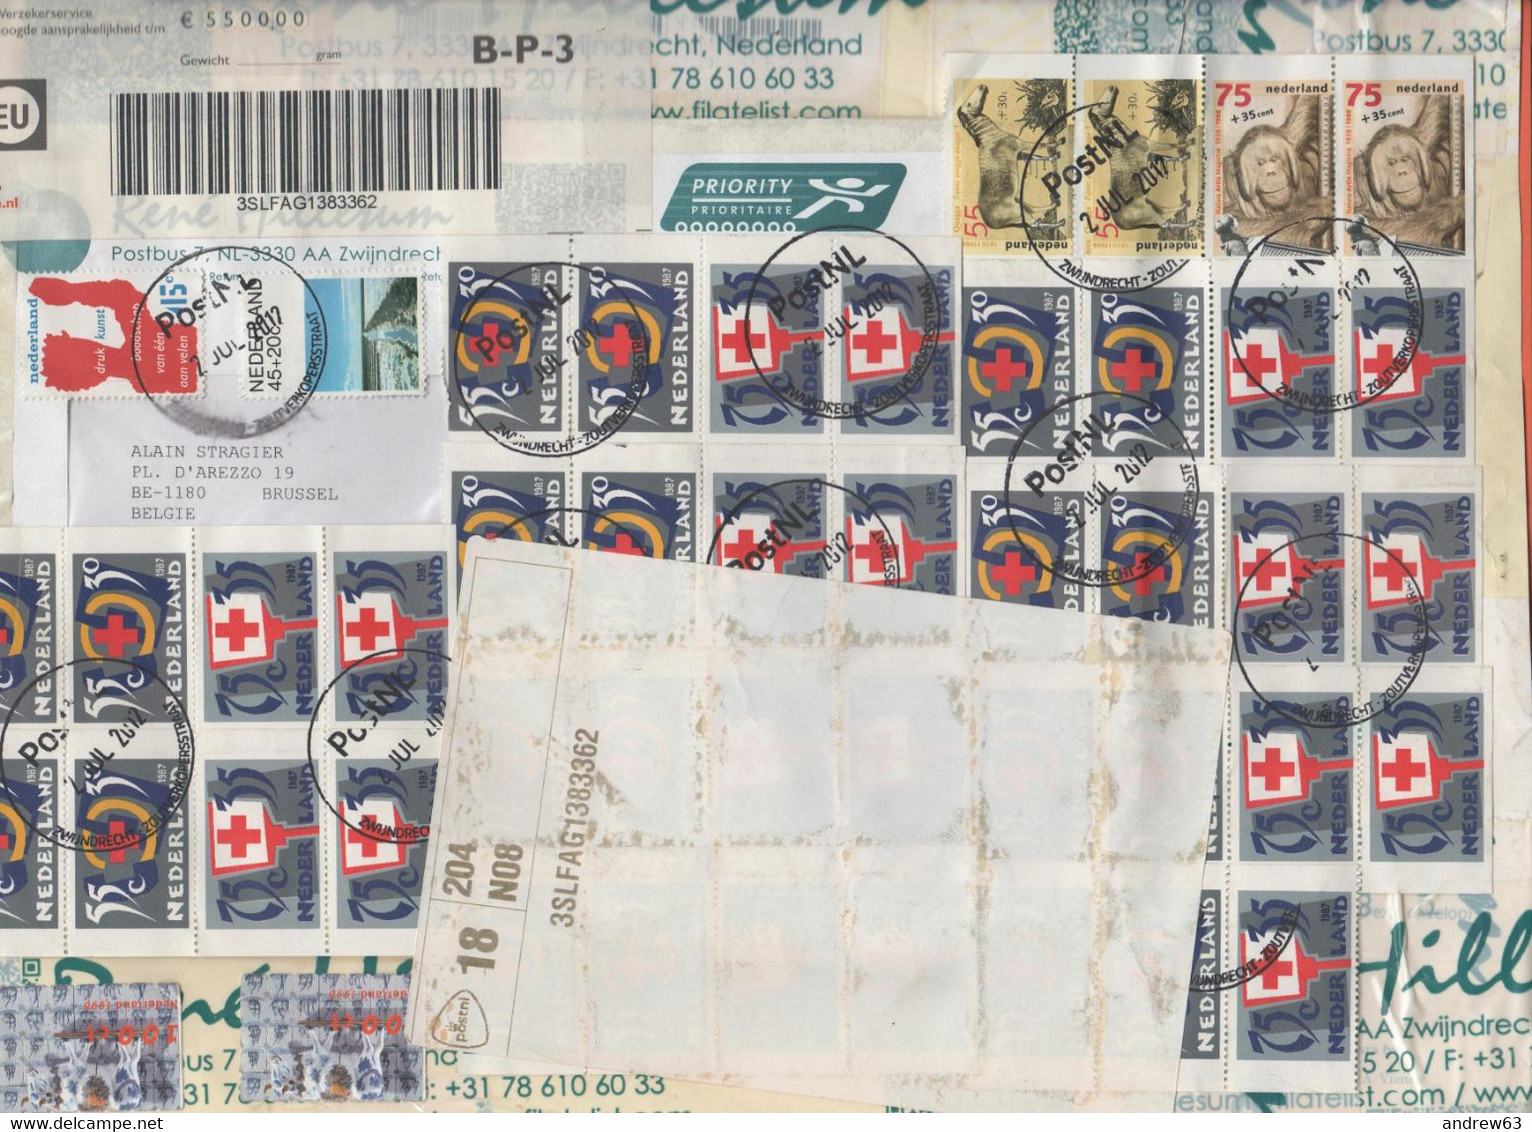 OLANDA - NEDERLAND - Paesi Bassi - 2012 - Big Fragment With Several Stamps - Registered - Viaggiata Da Zwijndrecht Per B - Briefe U. Dokumente